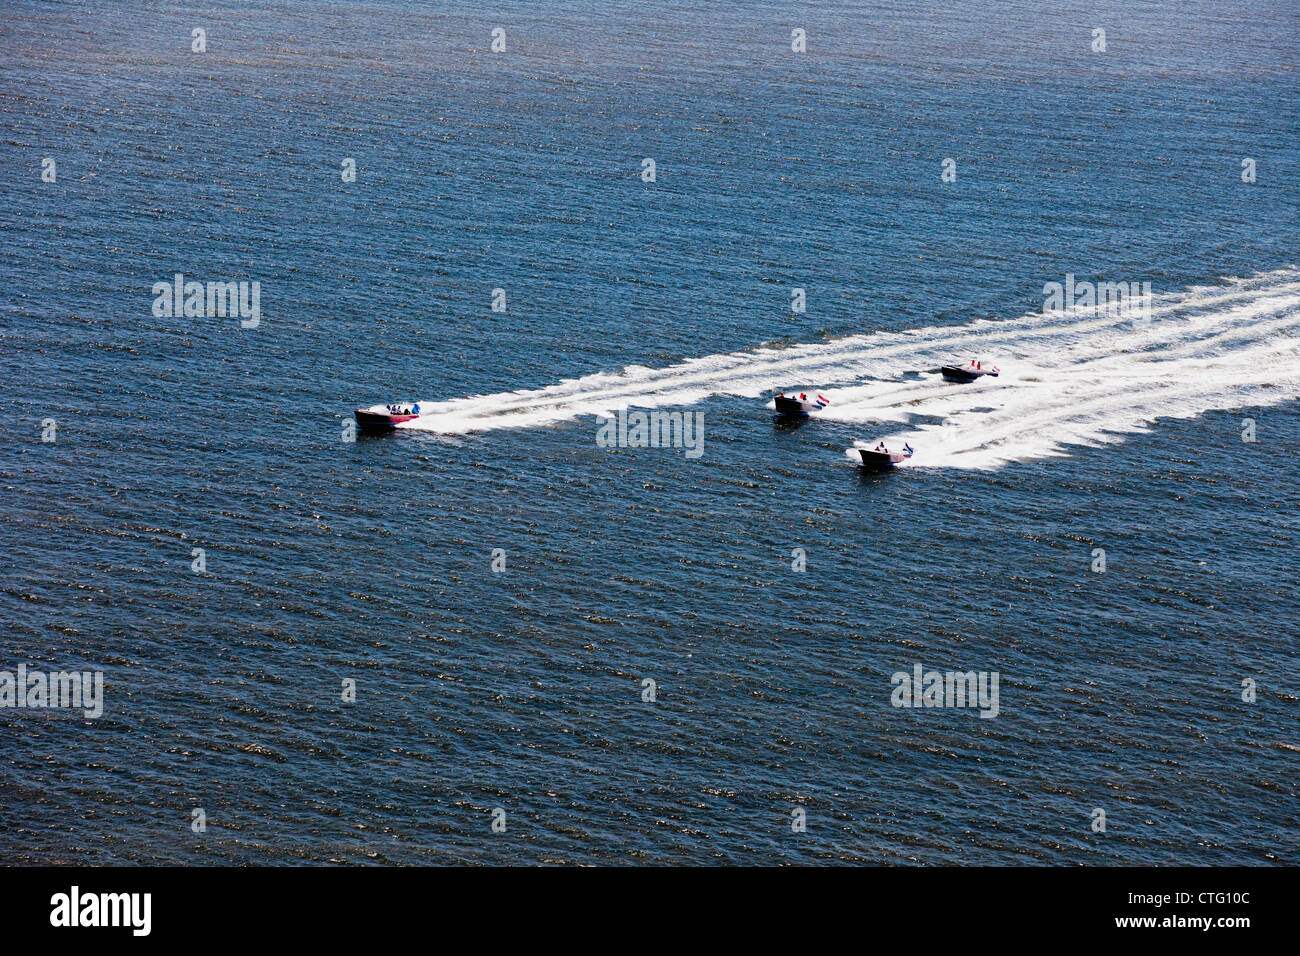 The Netherlands, Zandvoort, Aerial, Boats racing on sea. Stock Photo